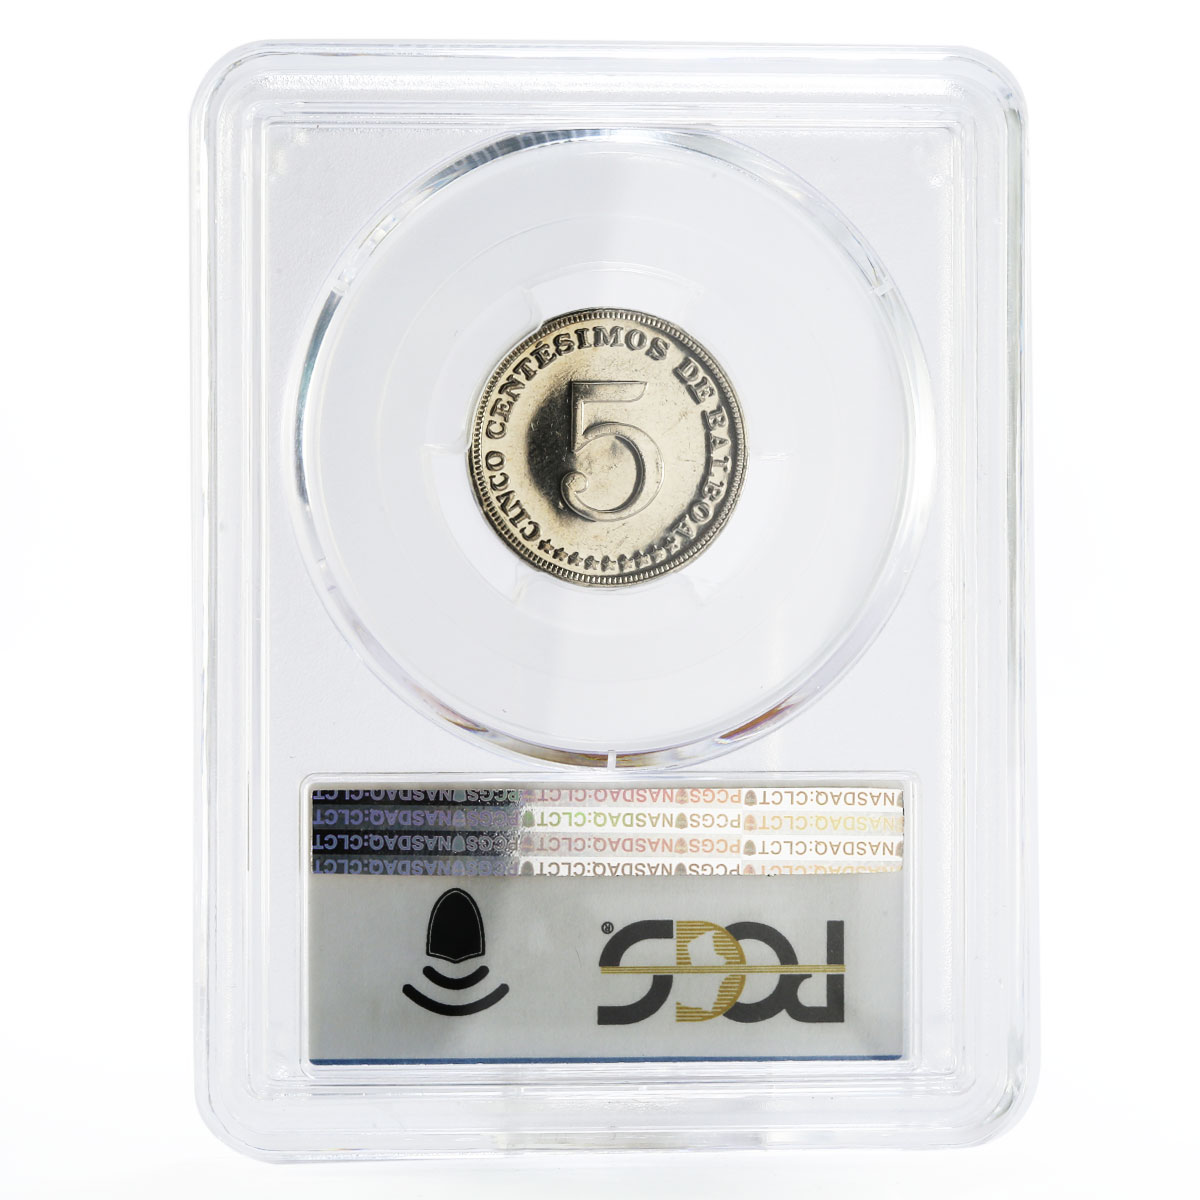 Panama 5 centesimos State Mint MS64 PCGS CuNi coin 1996